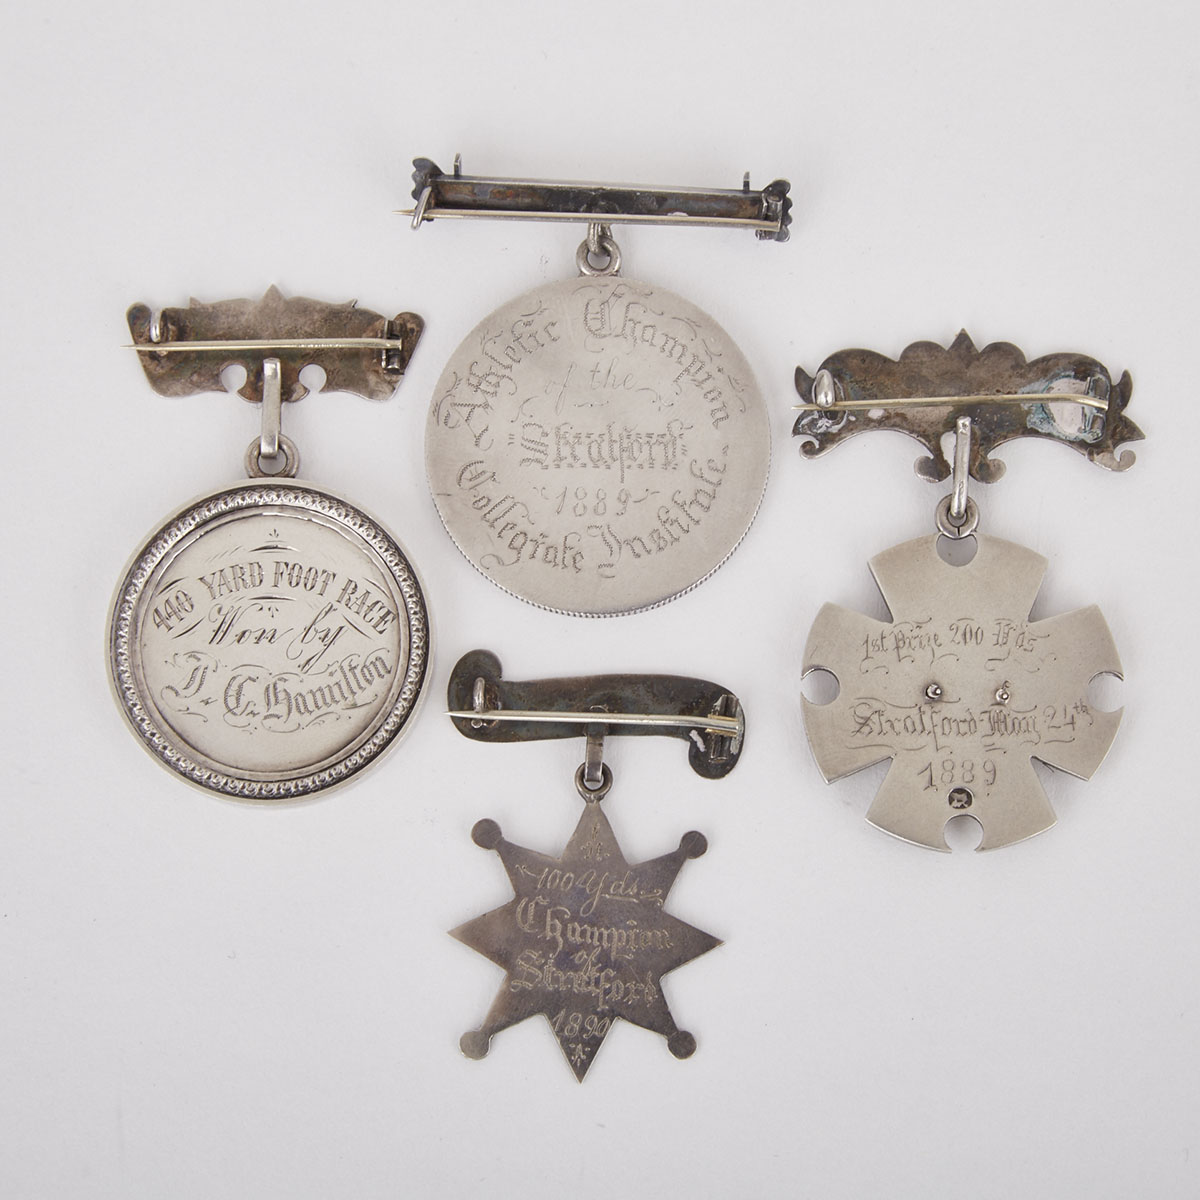 Four Canadian Silver Athletic Medals to John Cecil Hamilton, Stratford Collegiate Institute, Stratford, Ontario, 1889/90